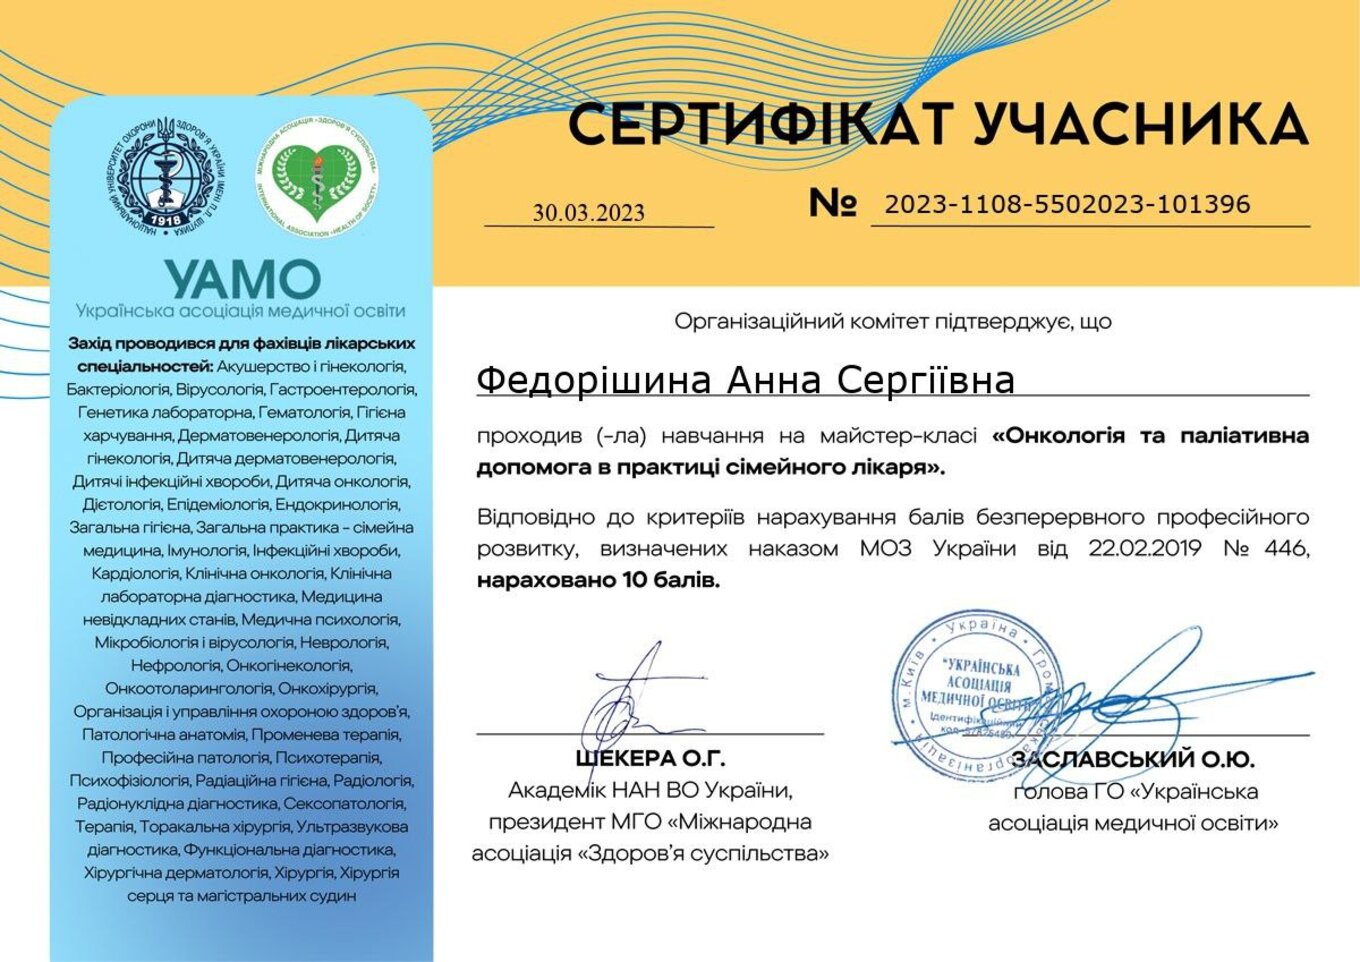 Fedorishina Anna Sergiyivna sertifikat13